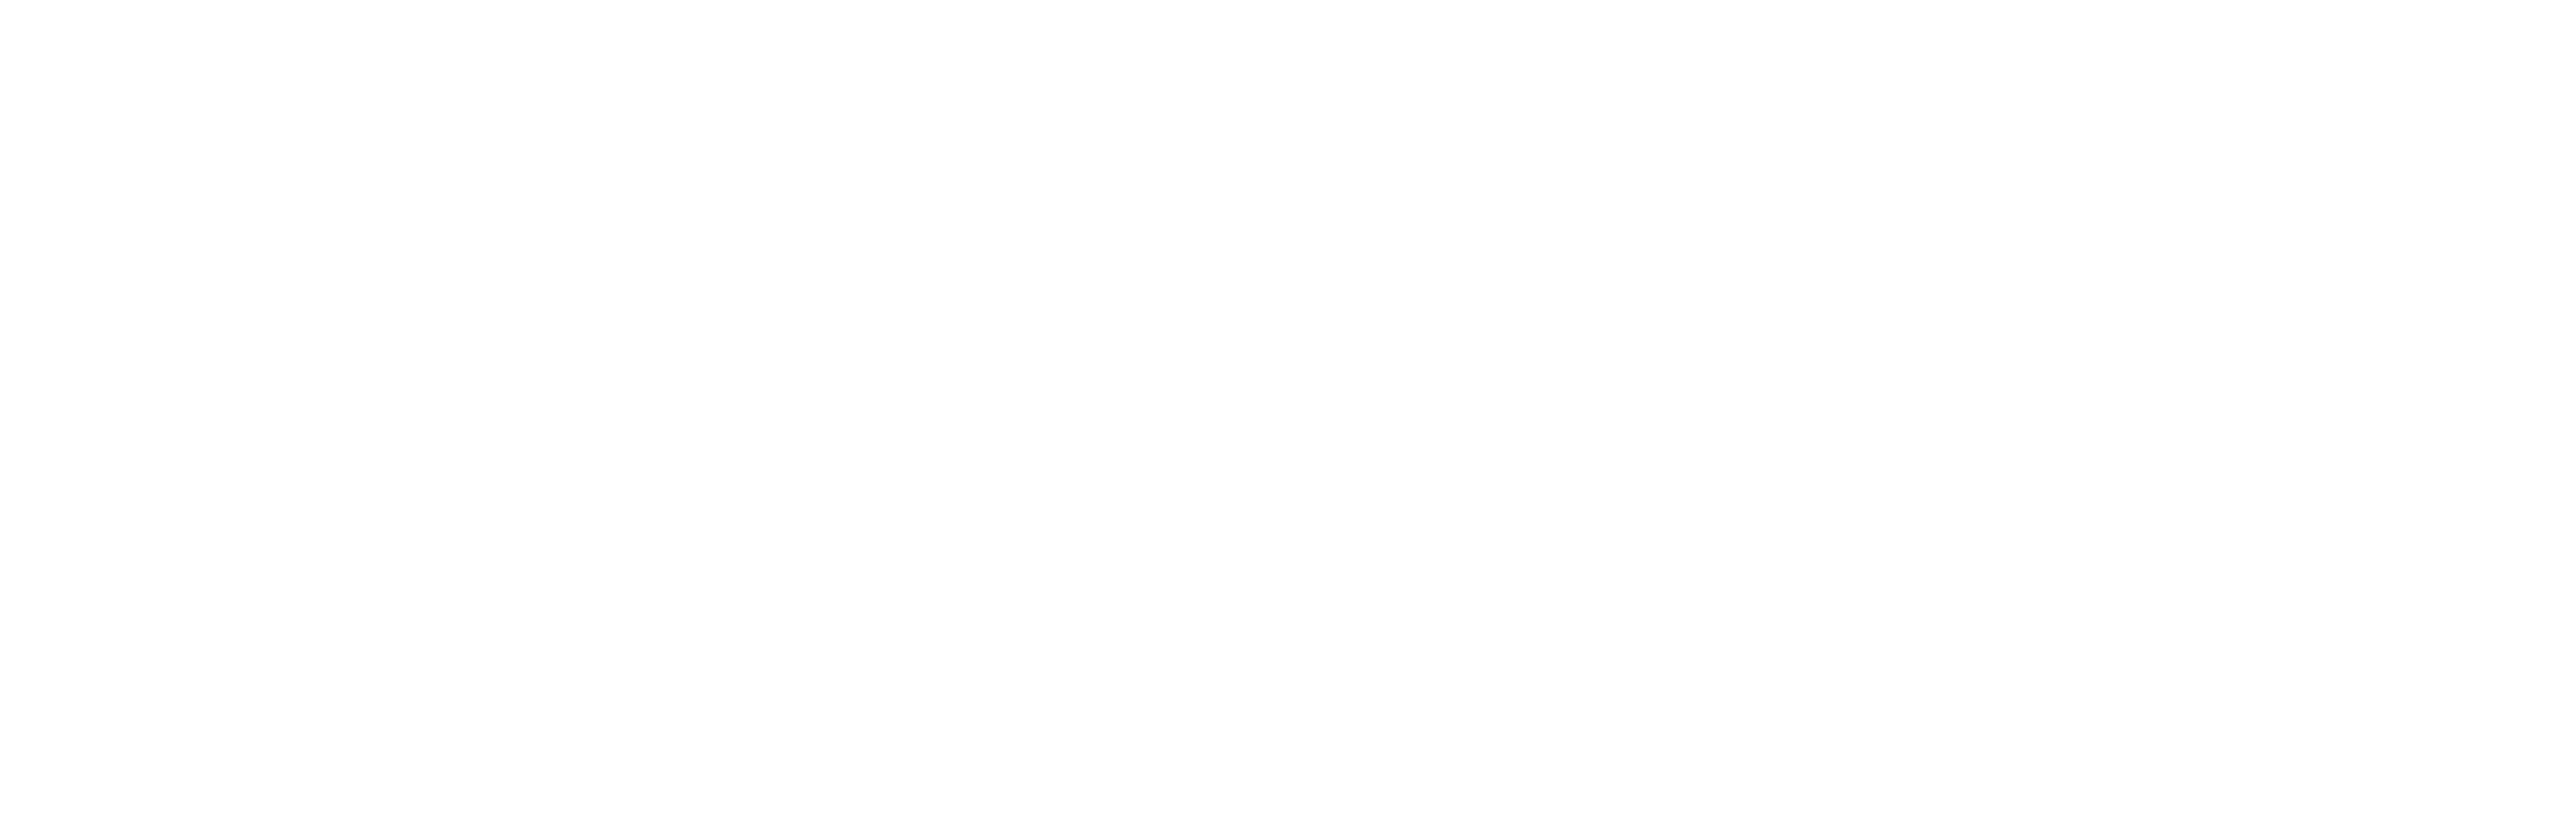 Anupama Hospital Logo